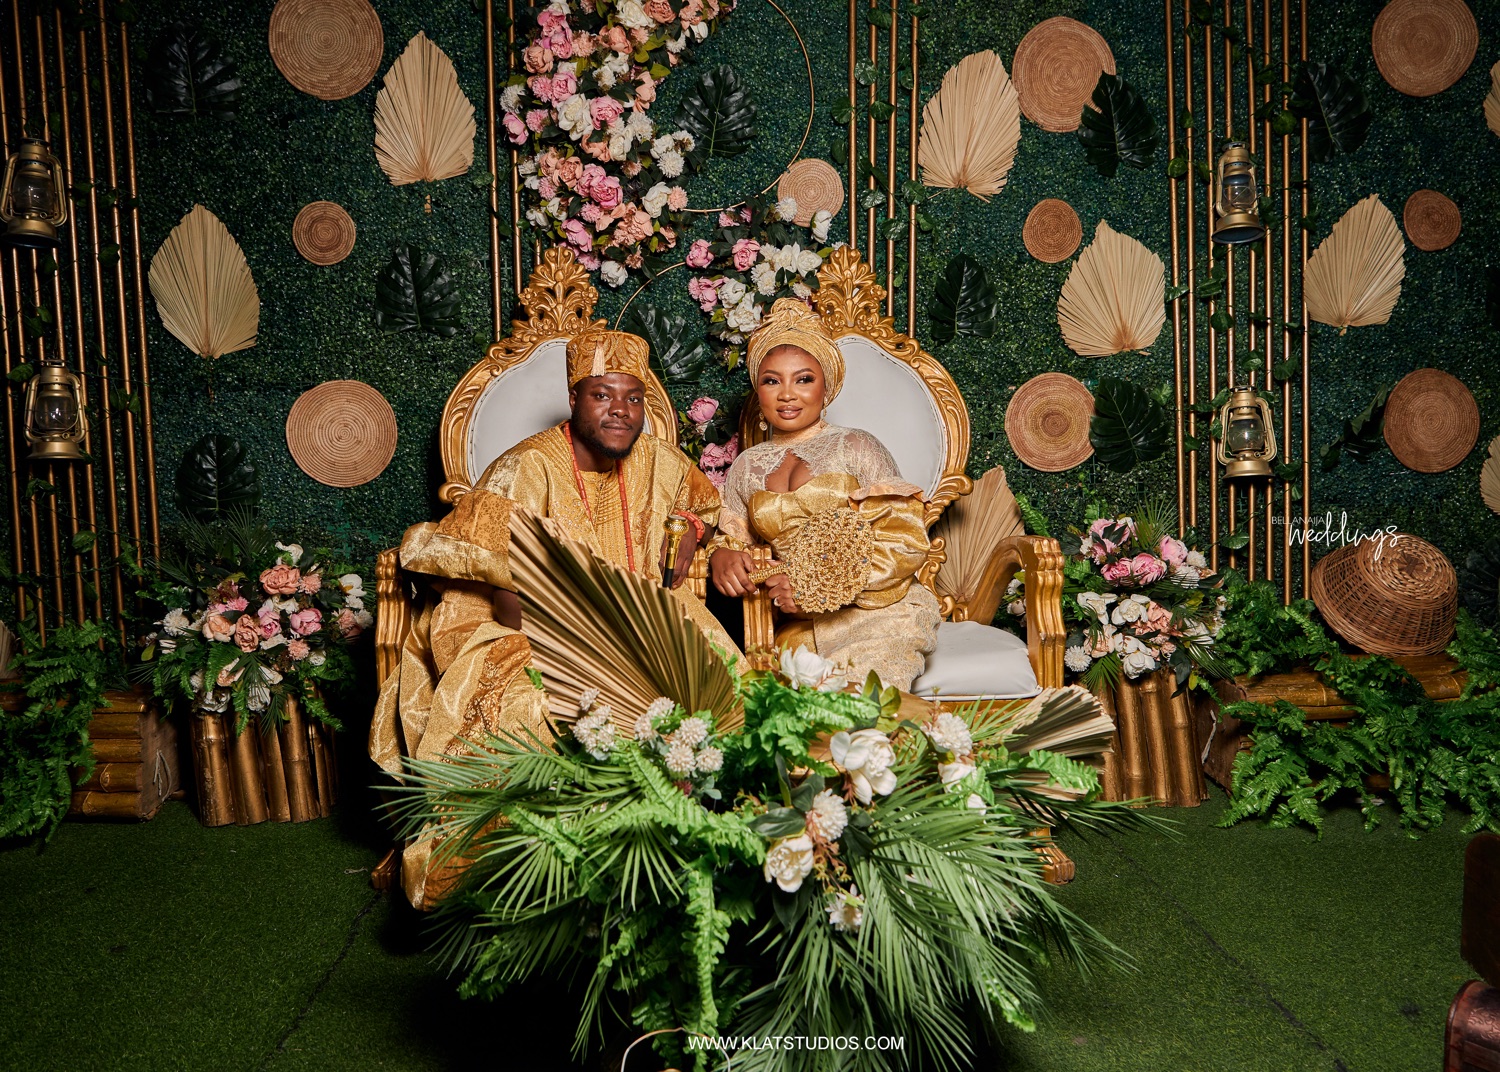 An Igbo bride and a Yoruba groom: Check out this beautiful African wedding #BecomingDAdelekes